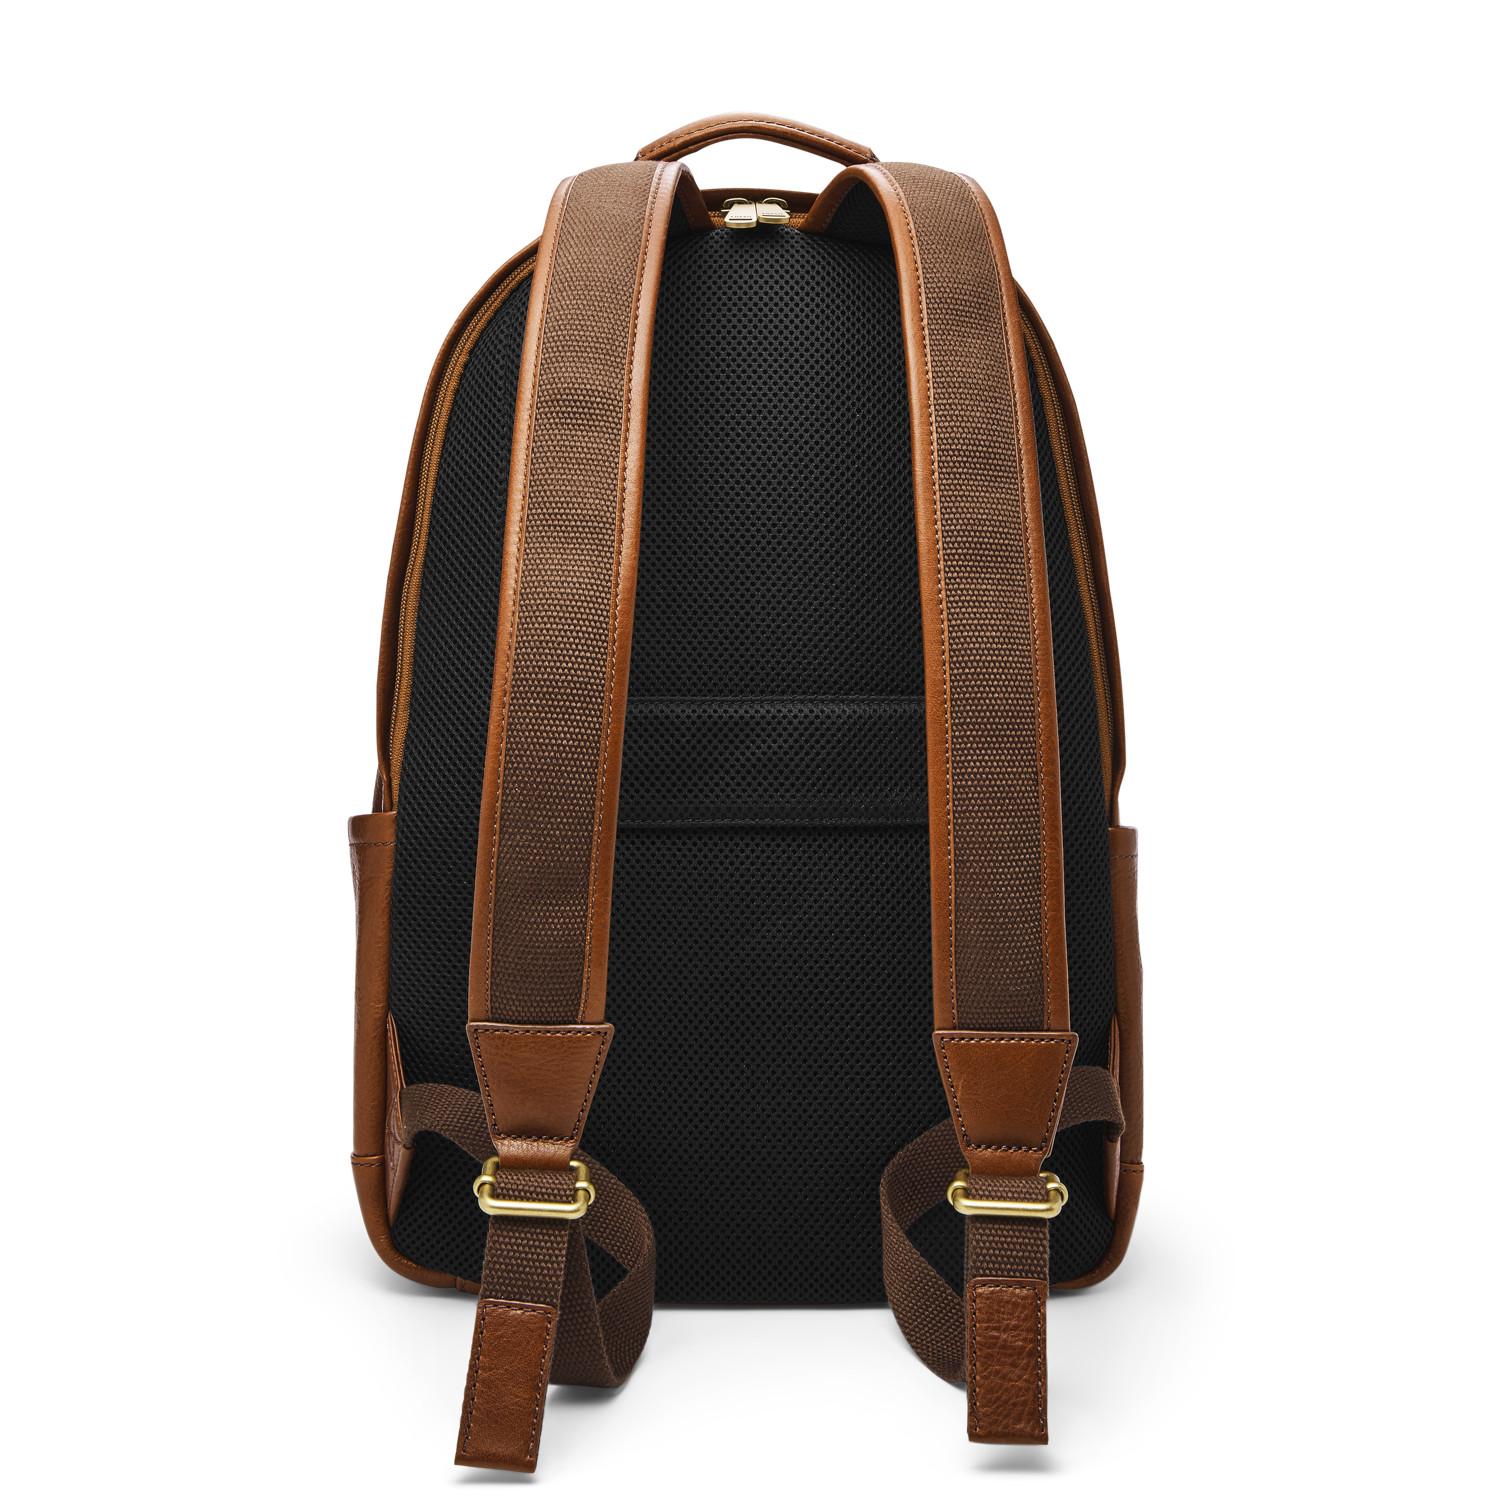 Fossil Leather Buckner Backpack in Brown for Men - Lyst